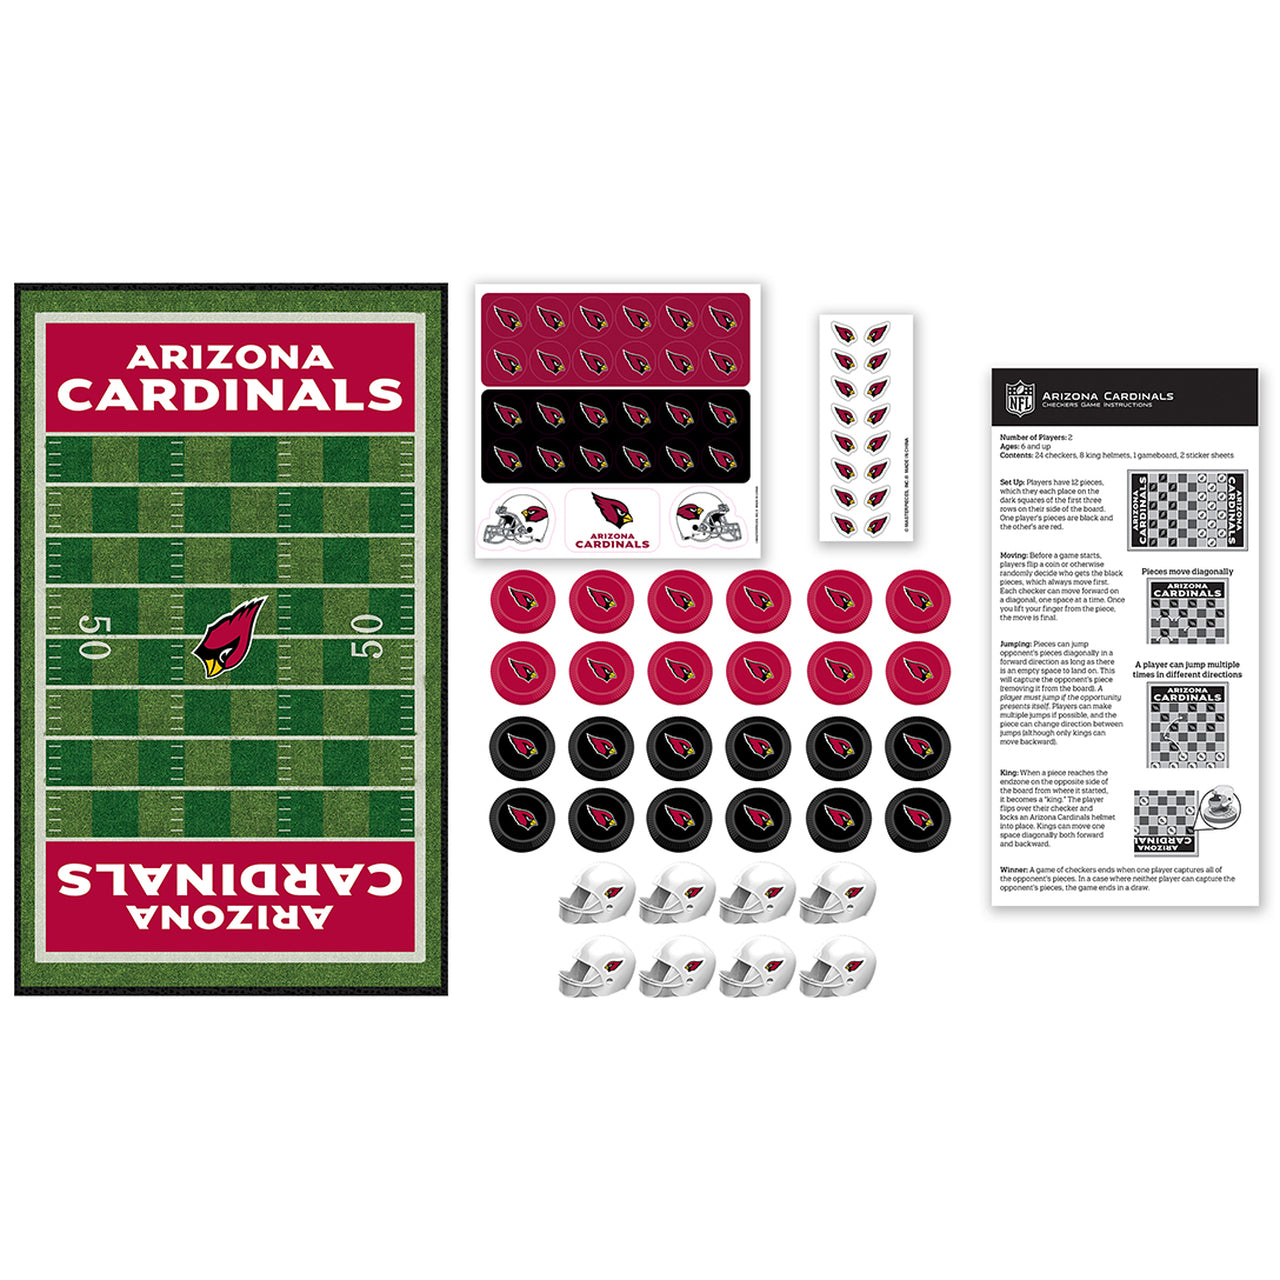 Arizona Cardinals Checkers Board Game by Masterpieces